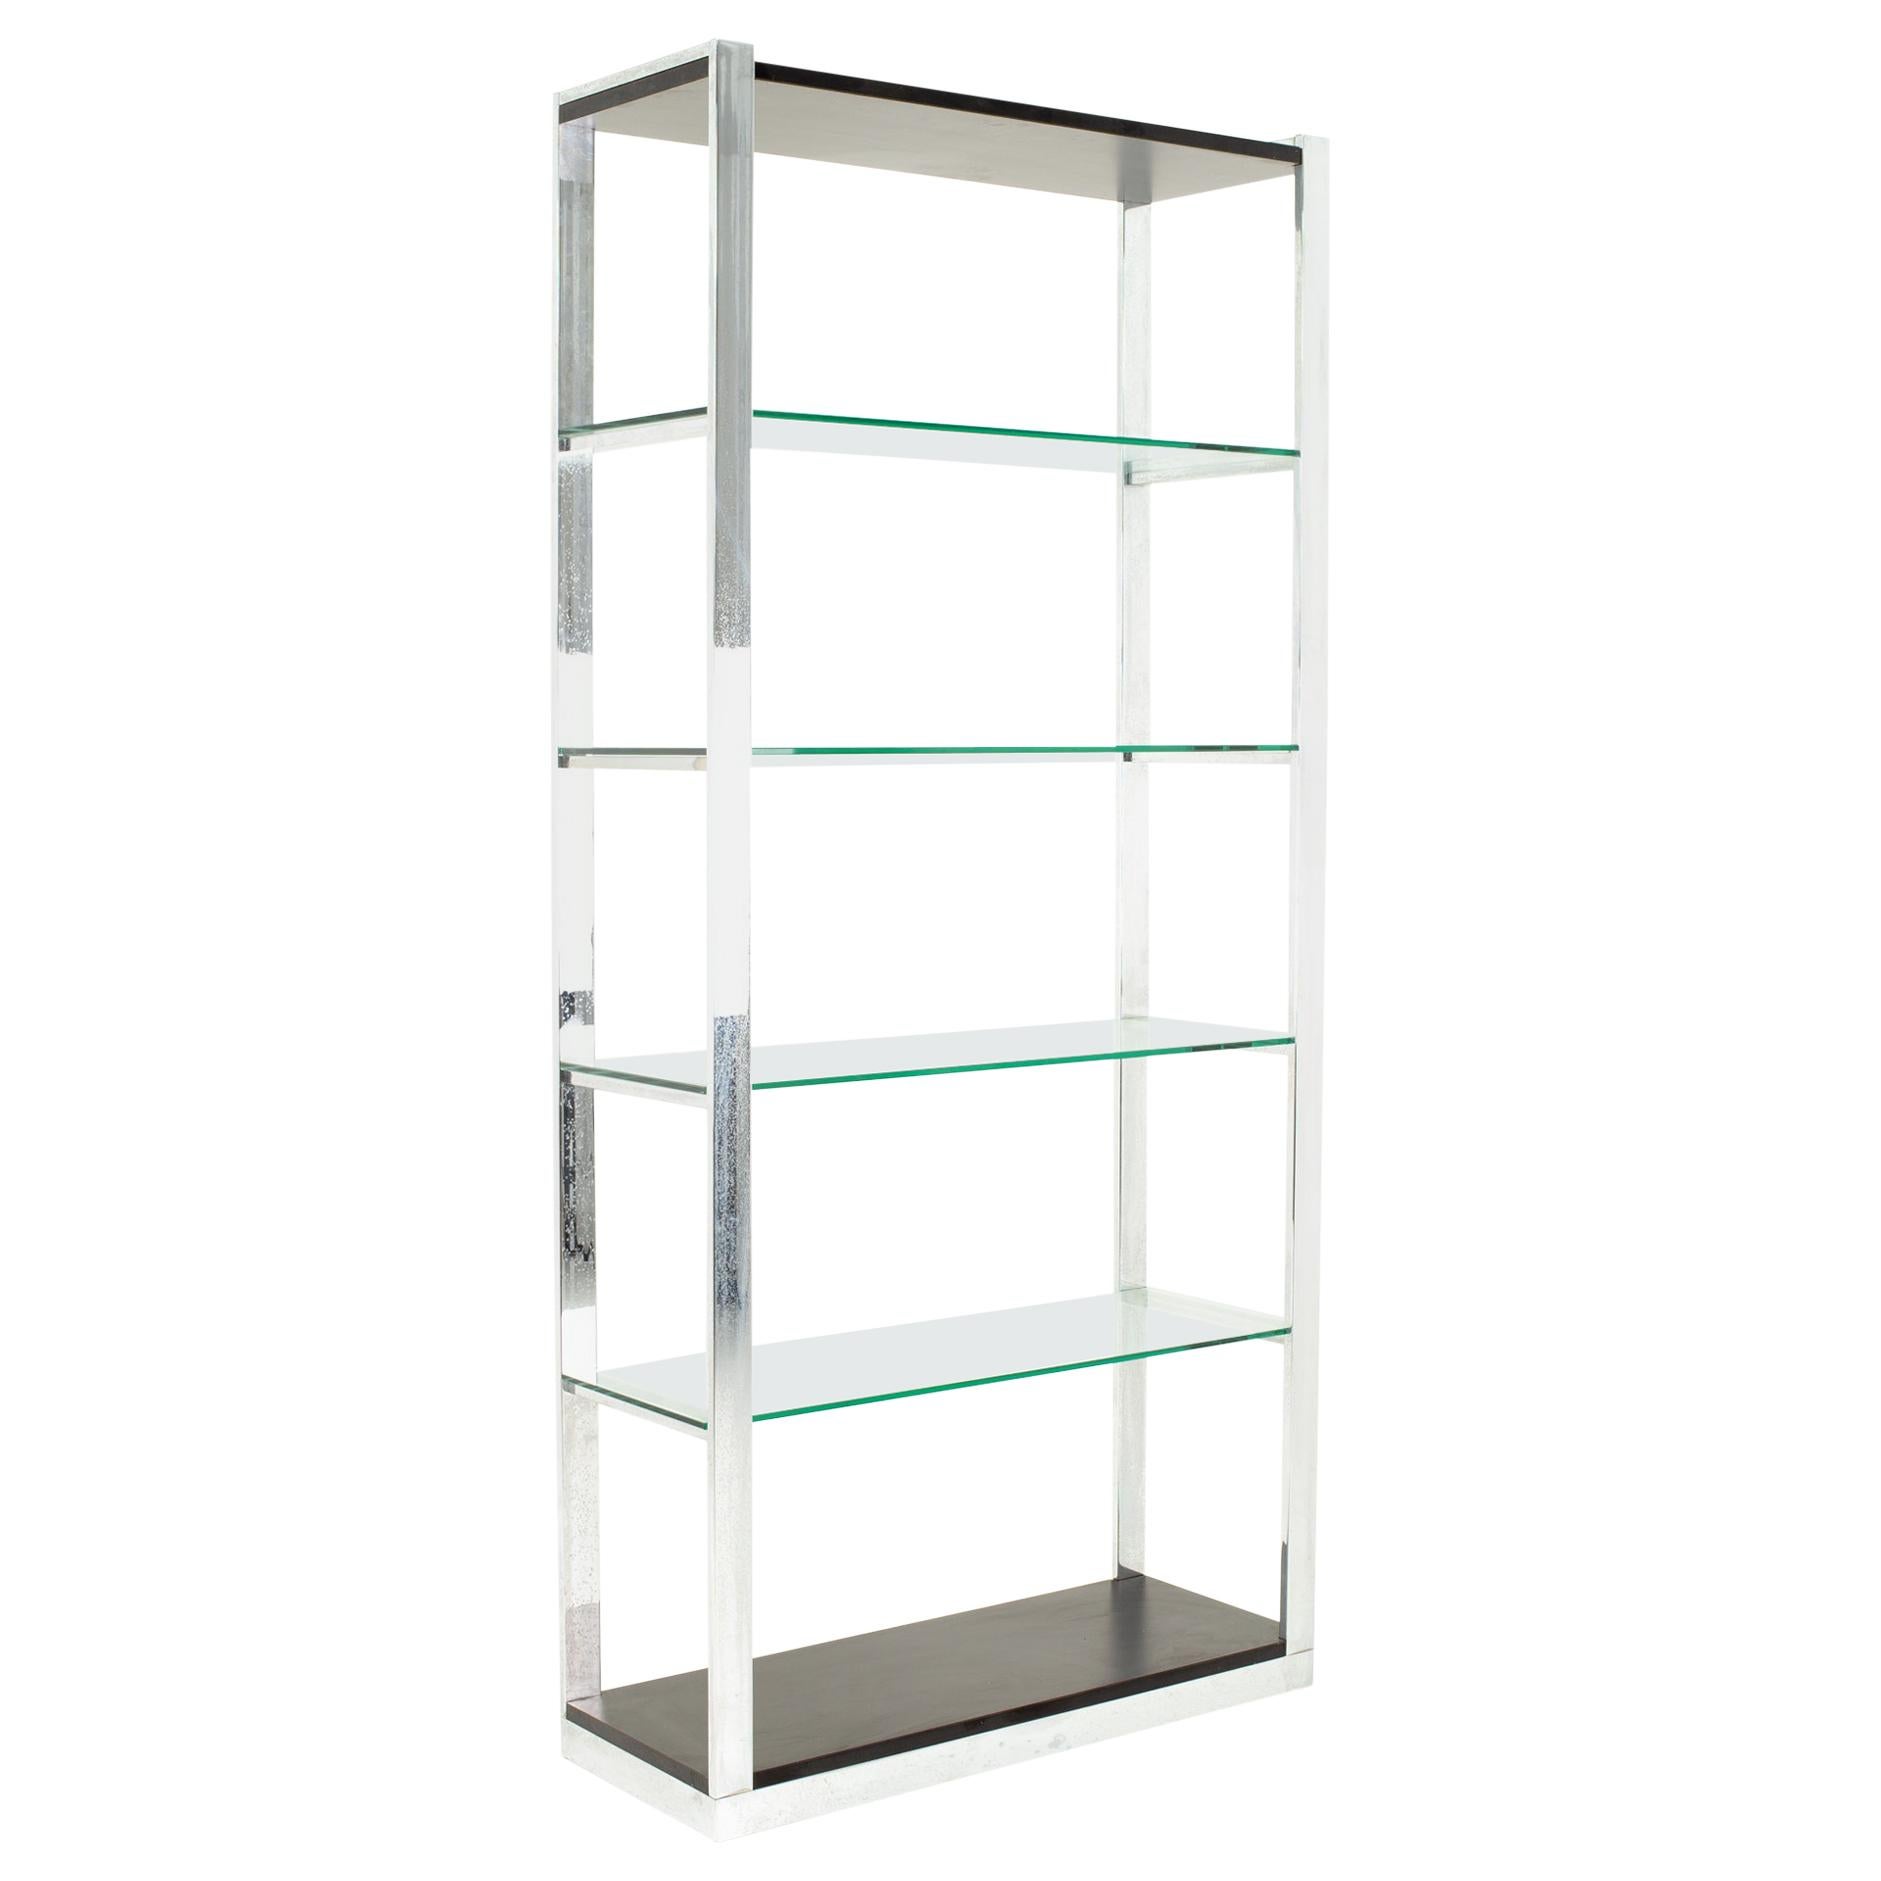 Haceka Aspen Glass Shelf 19 11/16in Metal Chrome-Plated Glass Shelves 